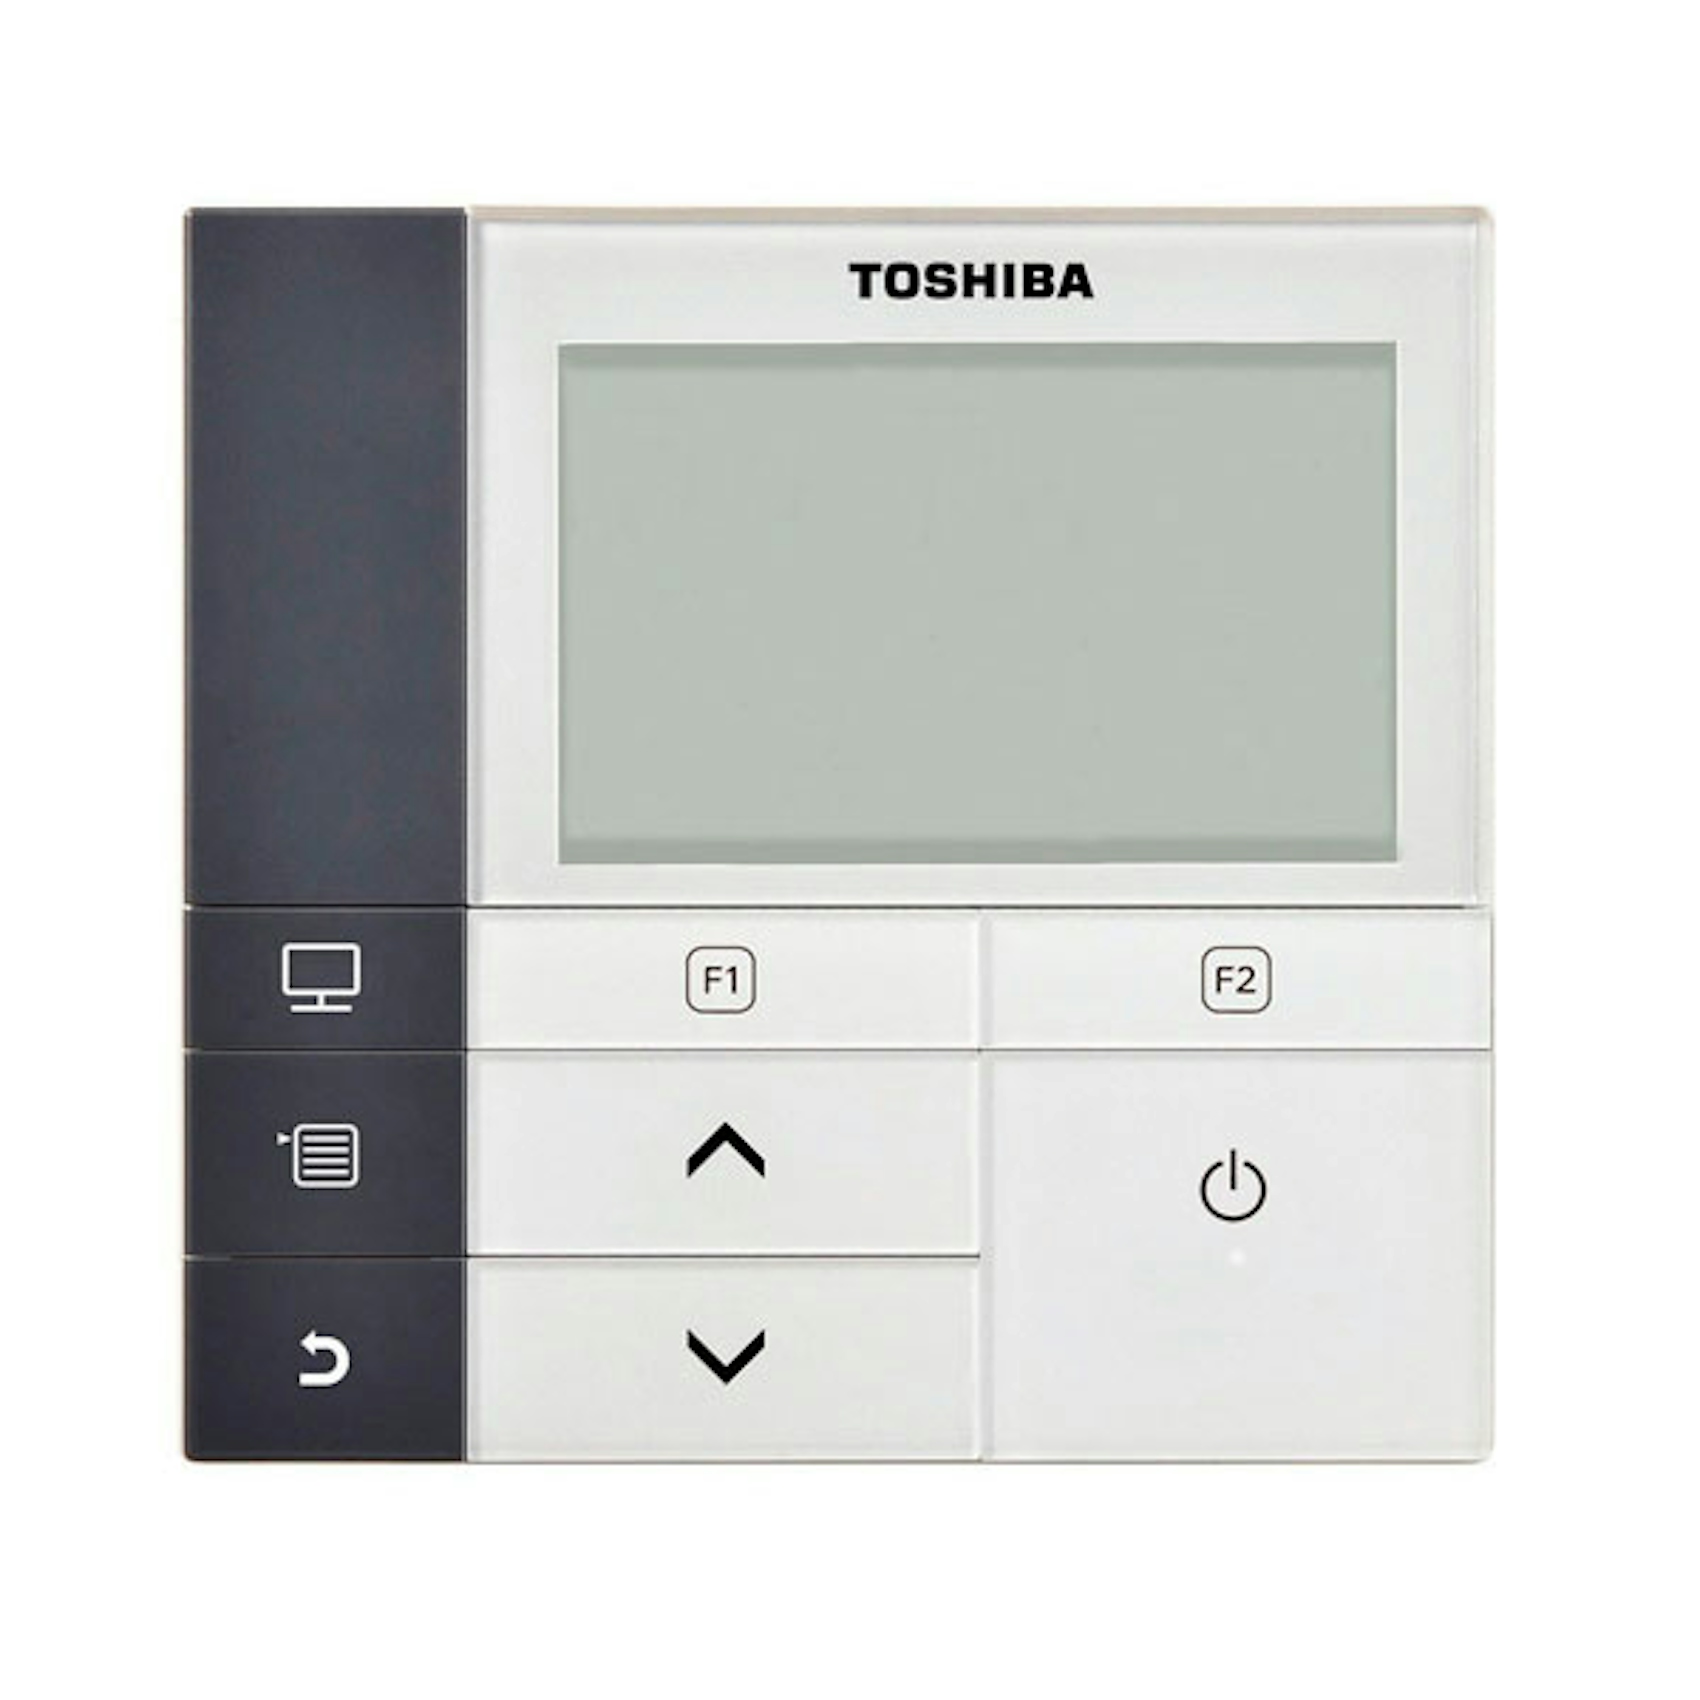 Aire Acondicionado Conductos Toshiba SPA DI CLASSIC 80